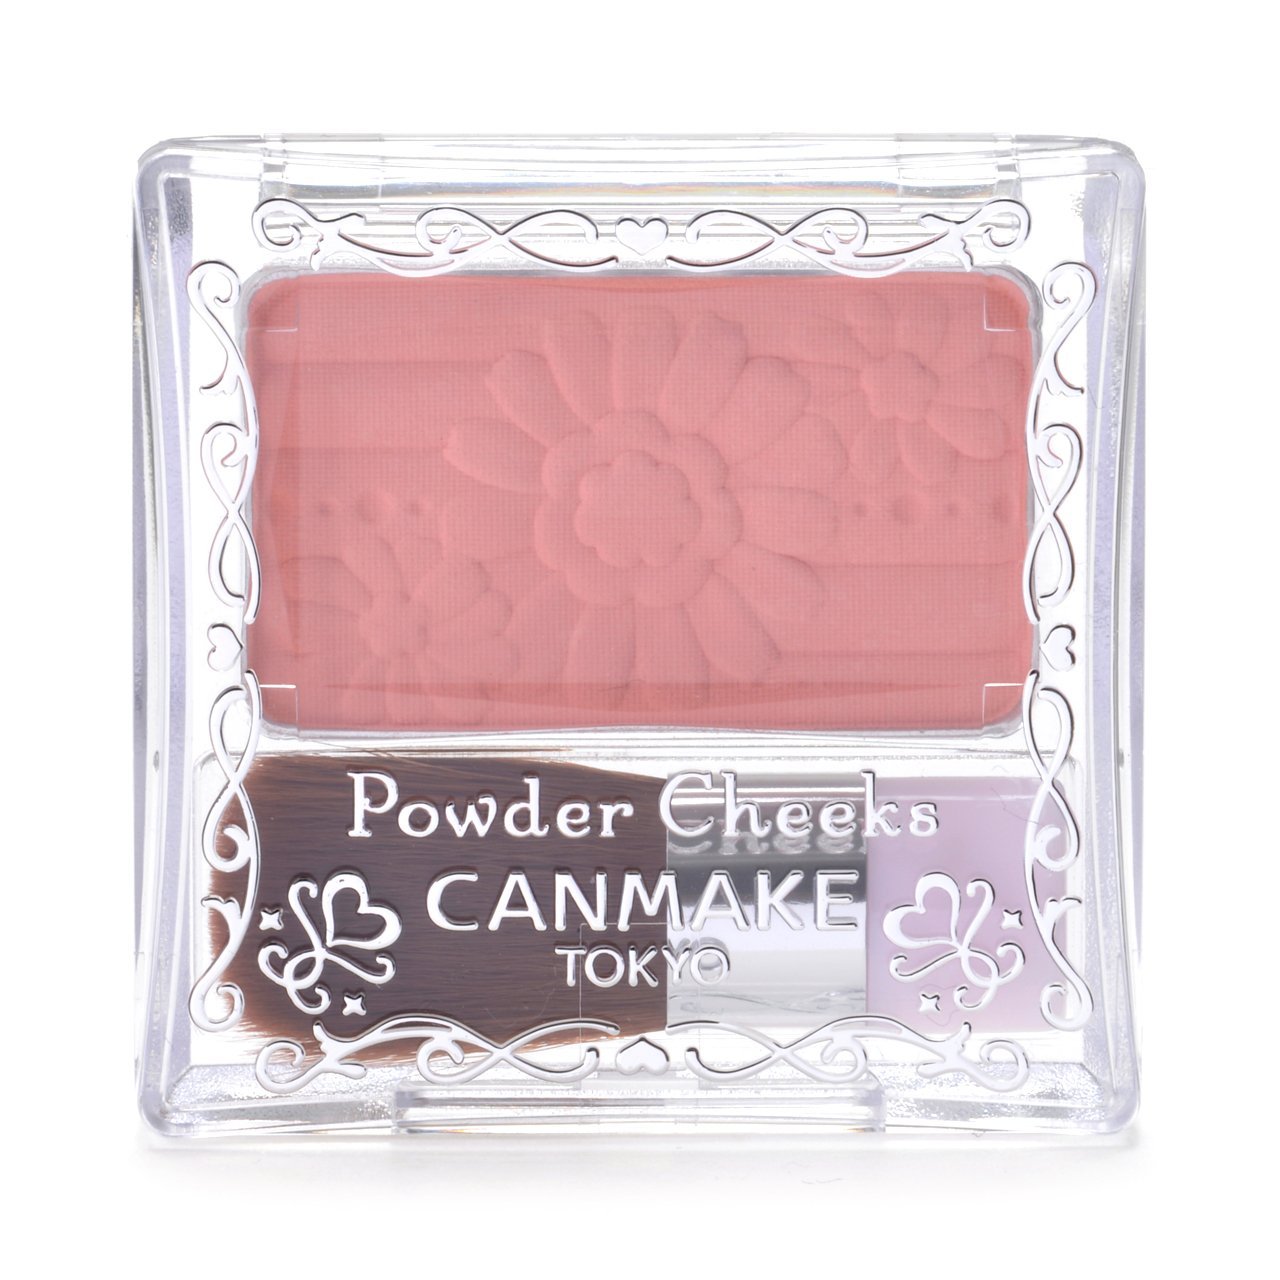 Canmake Shell Pink Powder Cheeks PW33 Long - Lasting Blush 4.4g